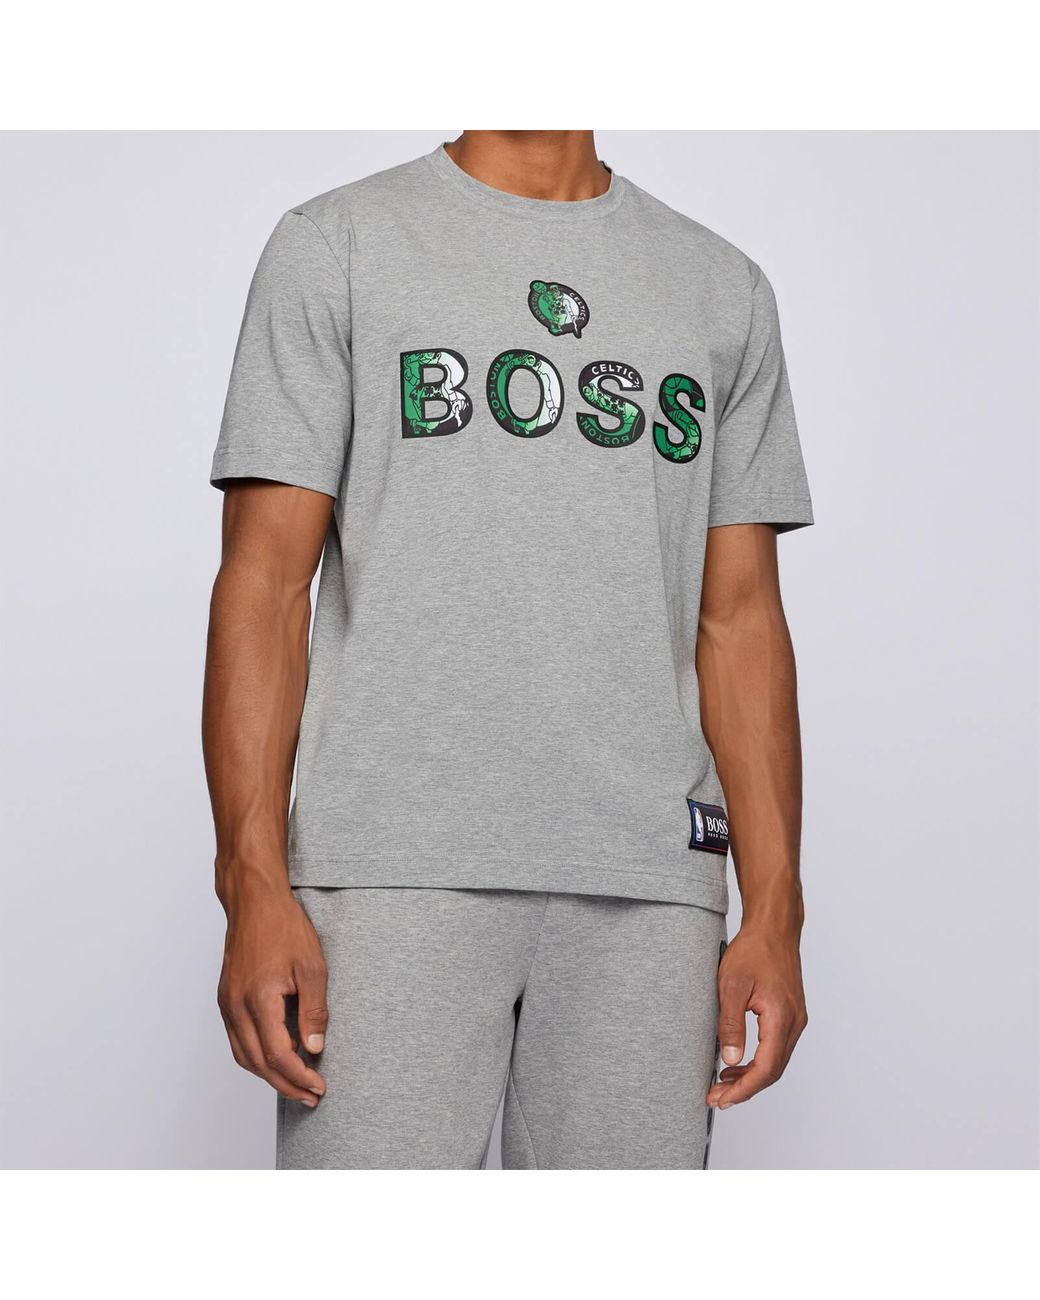 BOSS by HUGO BOSS X Nba Celtics Crewneck T-shirt in Gray for Men | Lyst